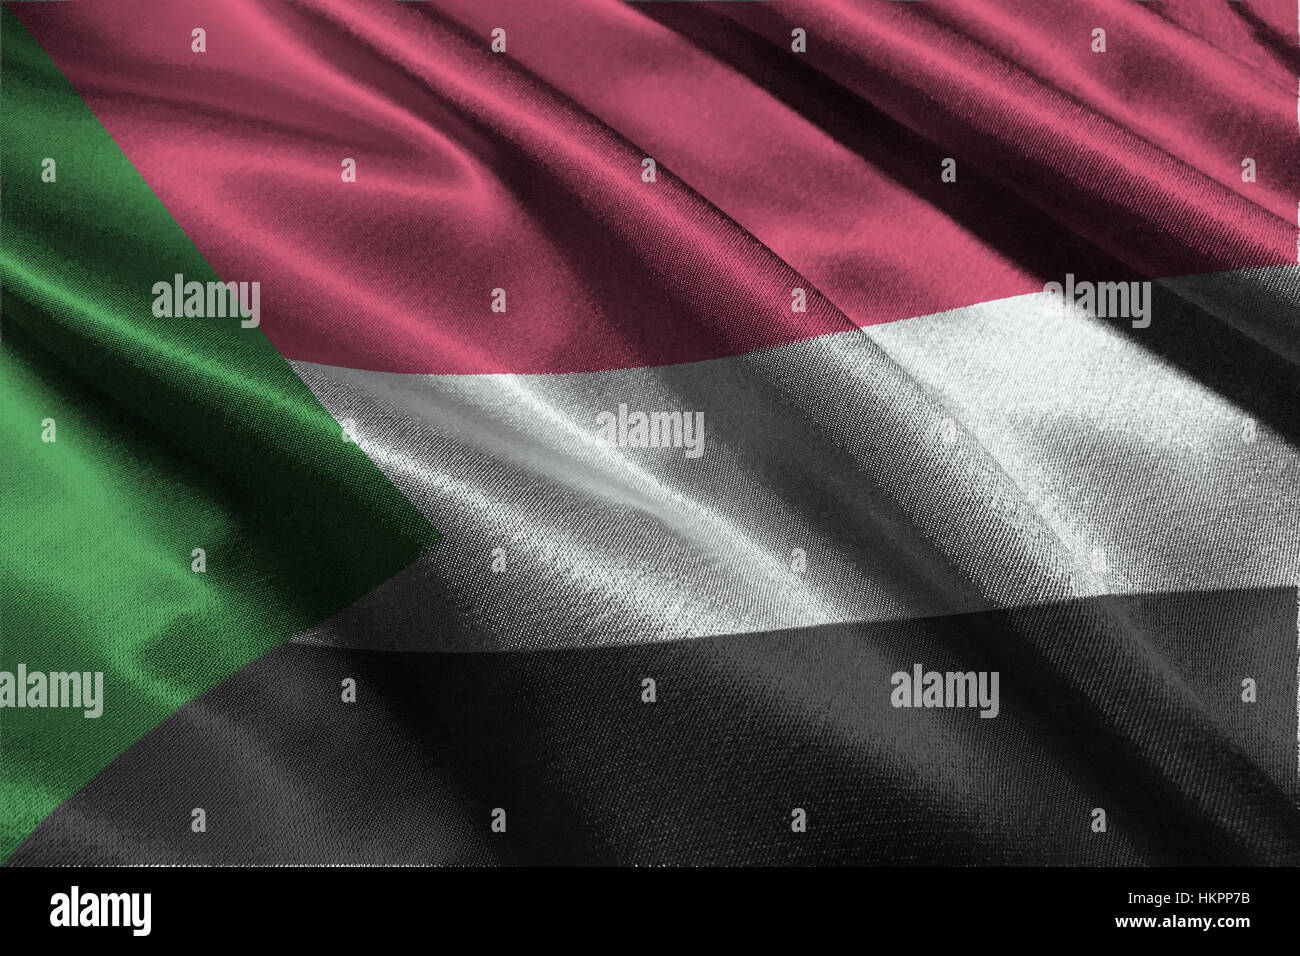 Sudan flag ,Sudan national flag 3D illustration symbol Stock Photo